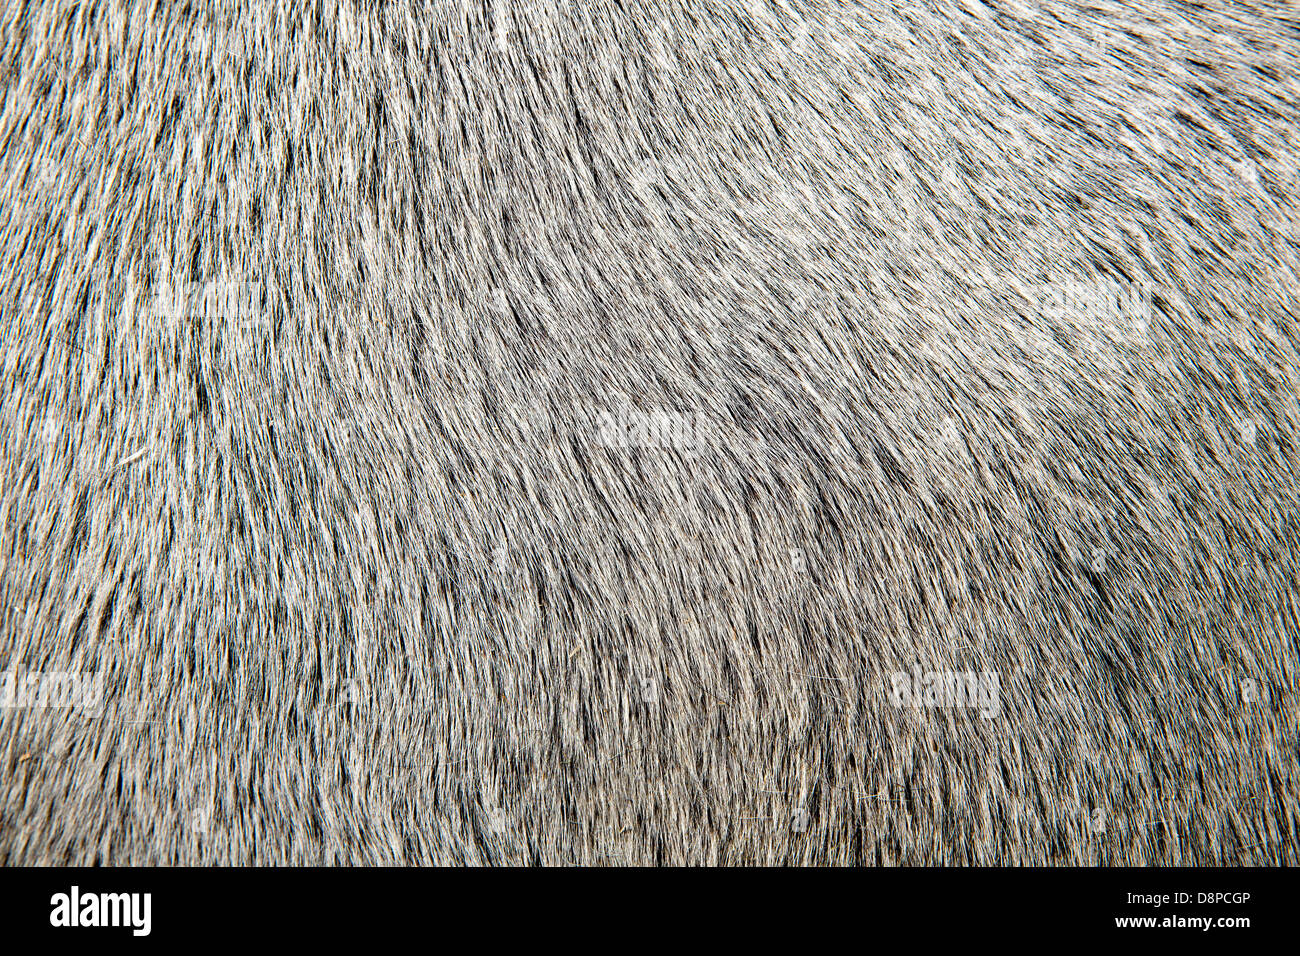 bull white hair closeup macro detail texture background Stock Photo